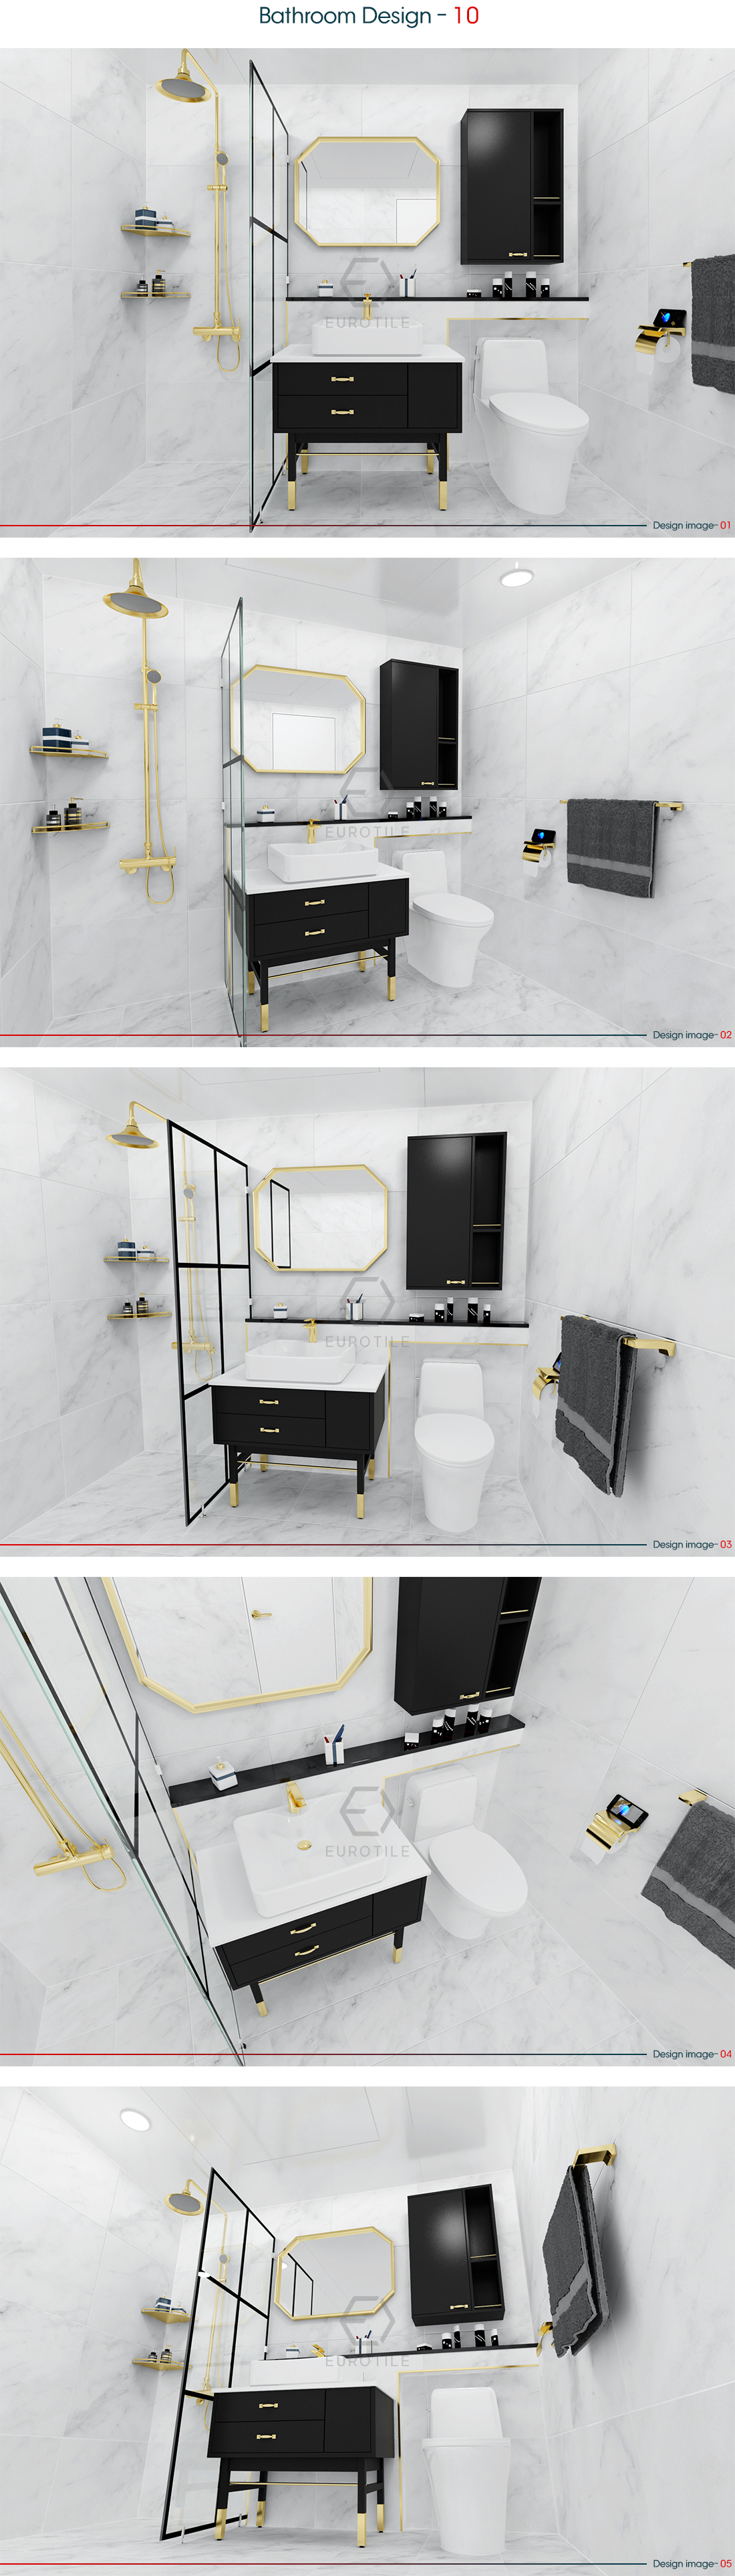 bathroomdesign-10_110427.jpg